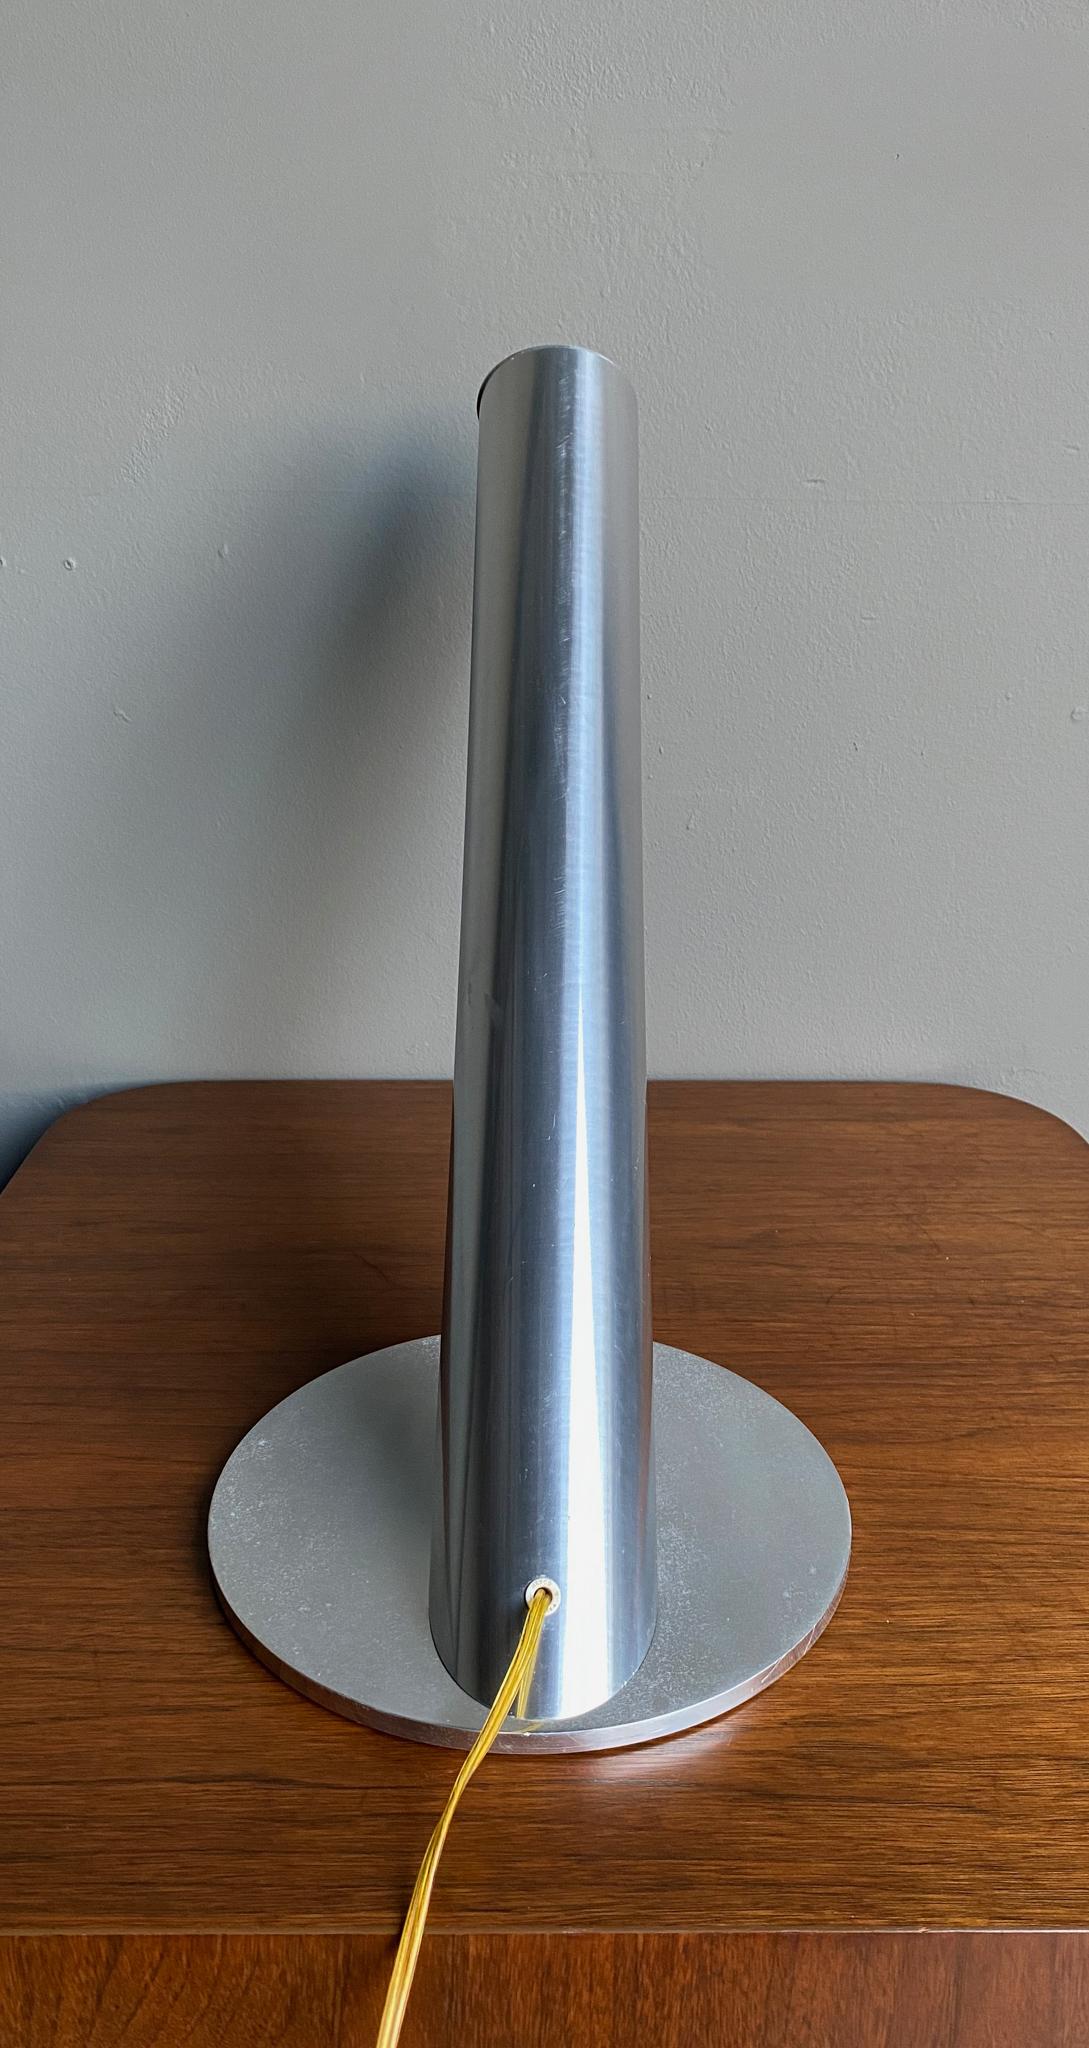 Aluminum Paul Mayen Angled Cylinder Lamp by for Habitat, circa 1970